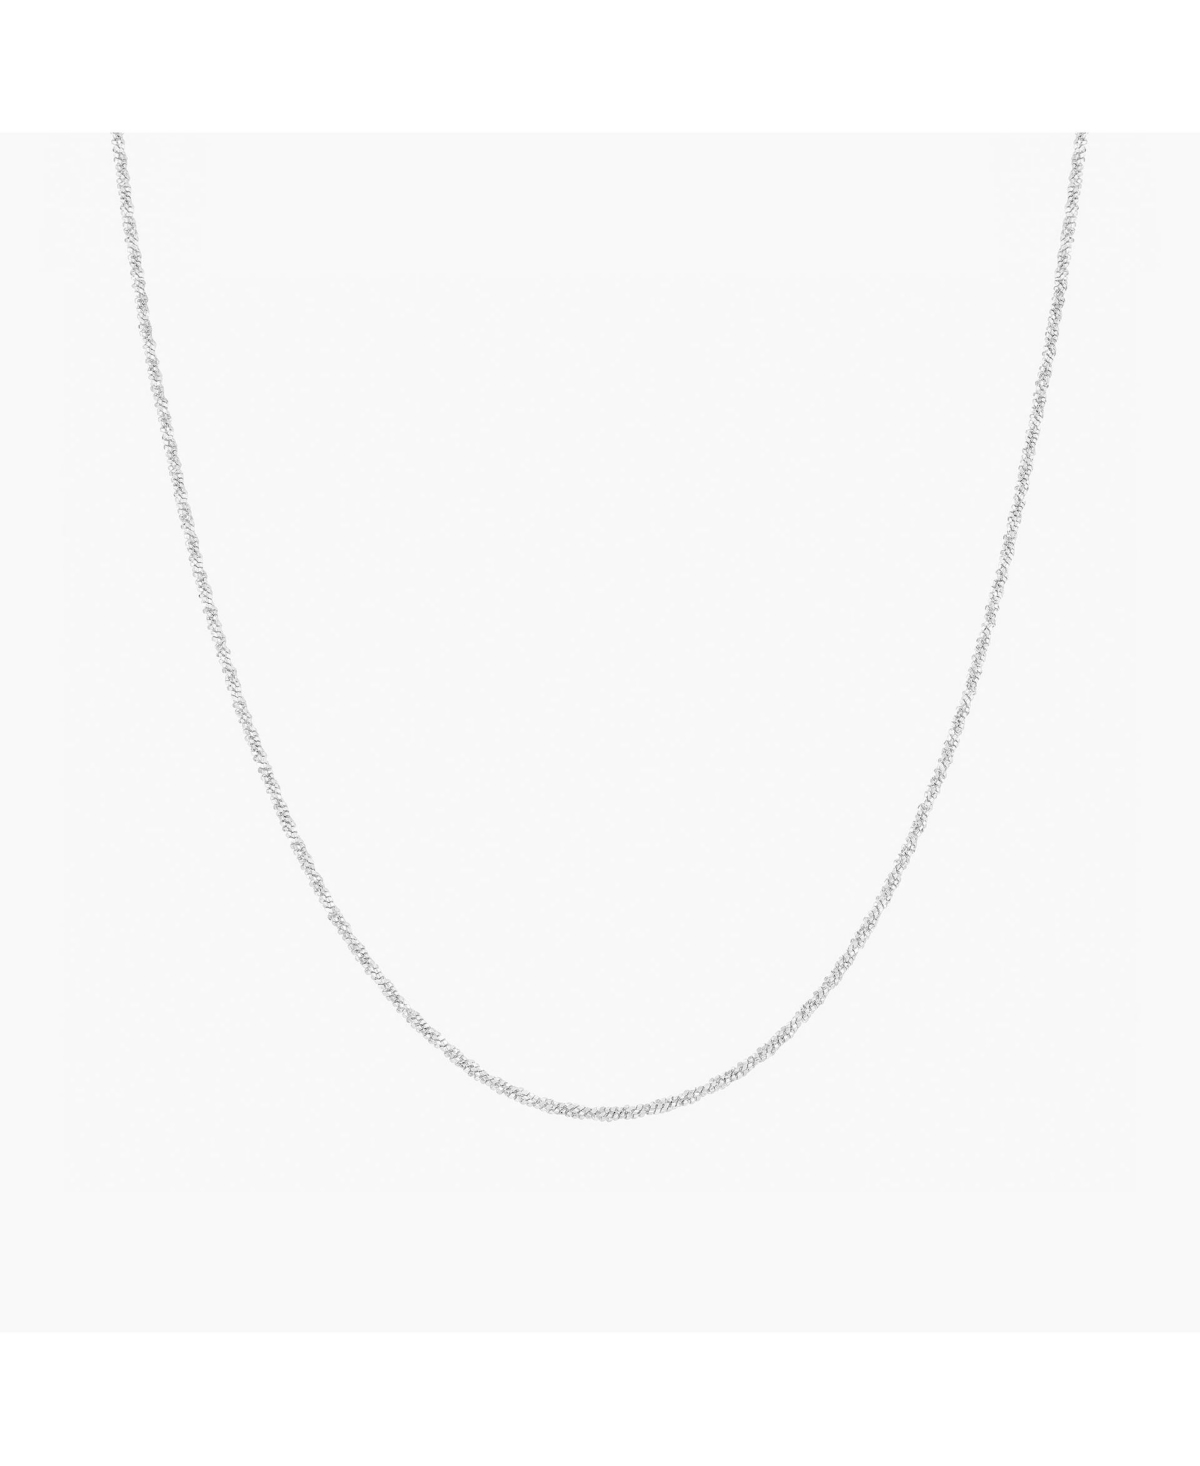 Jordyn Basic Chain Necklace - Silver